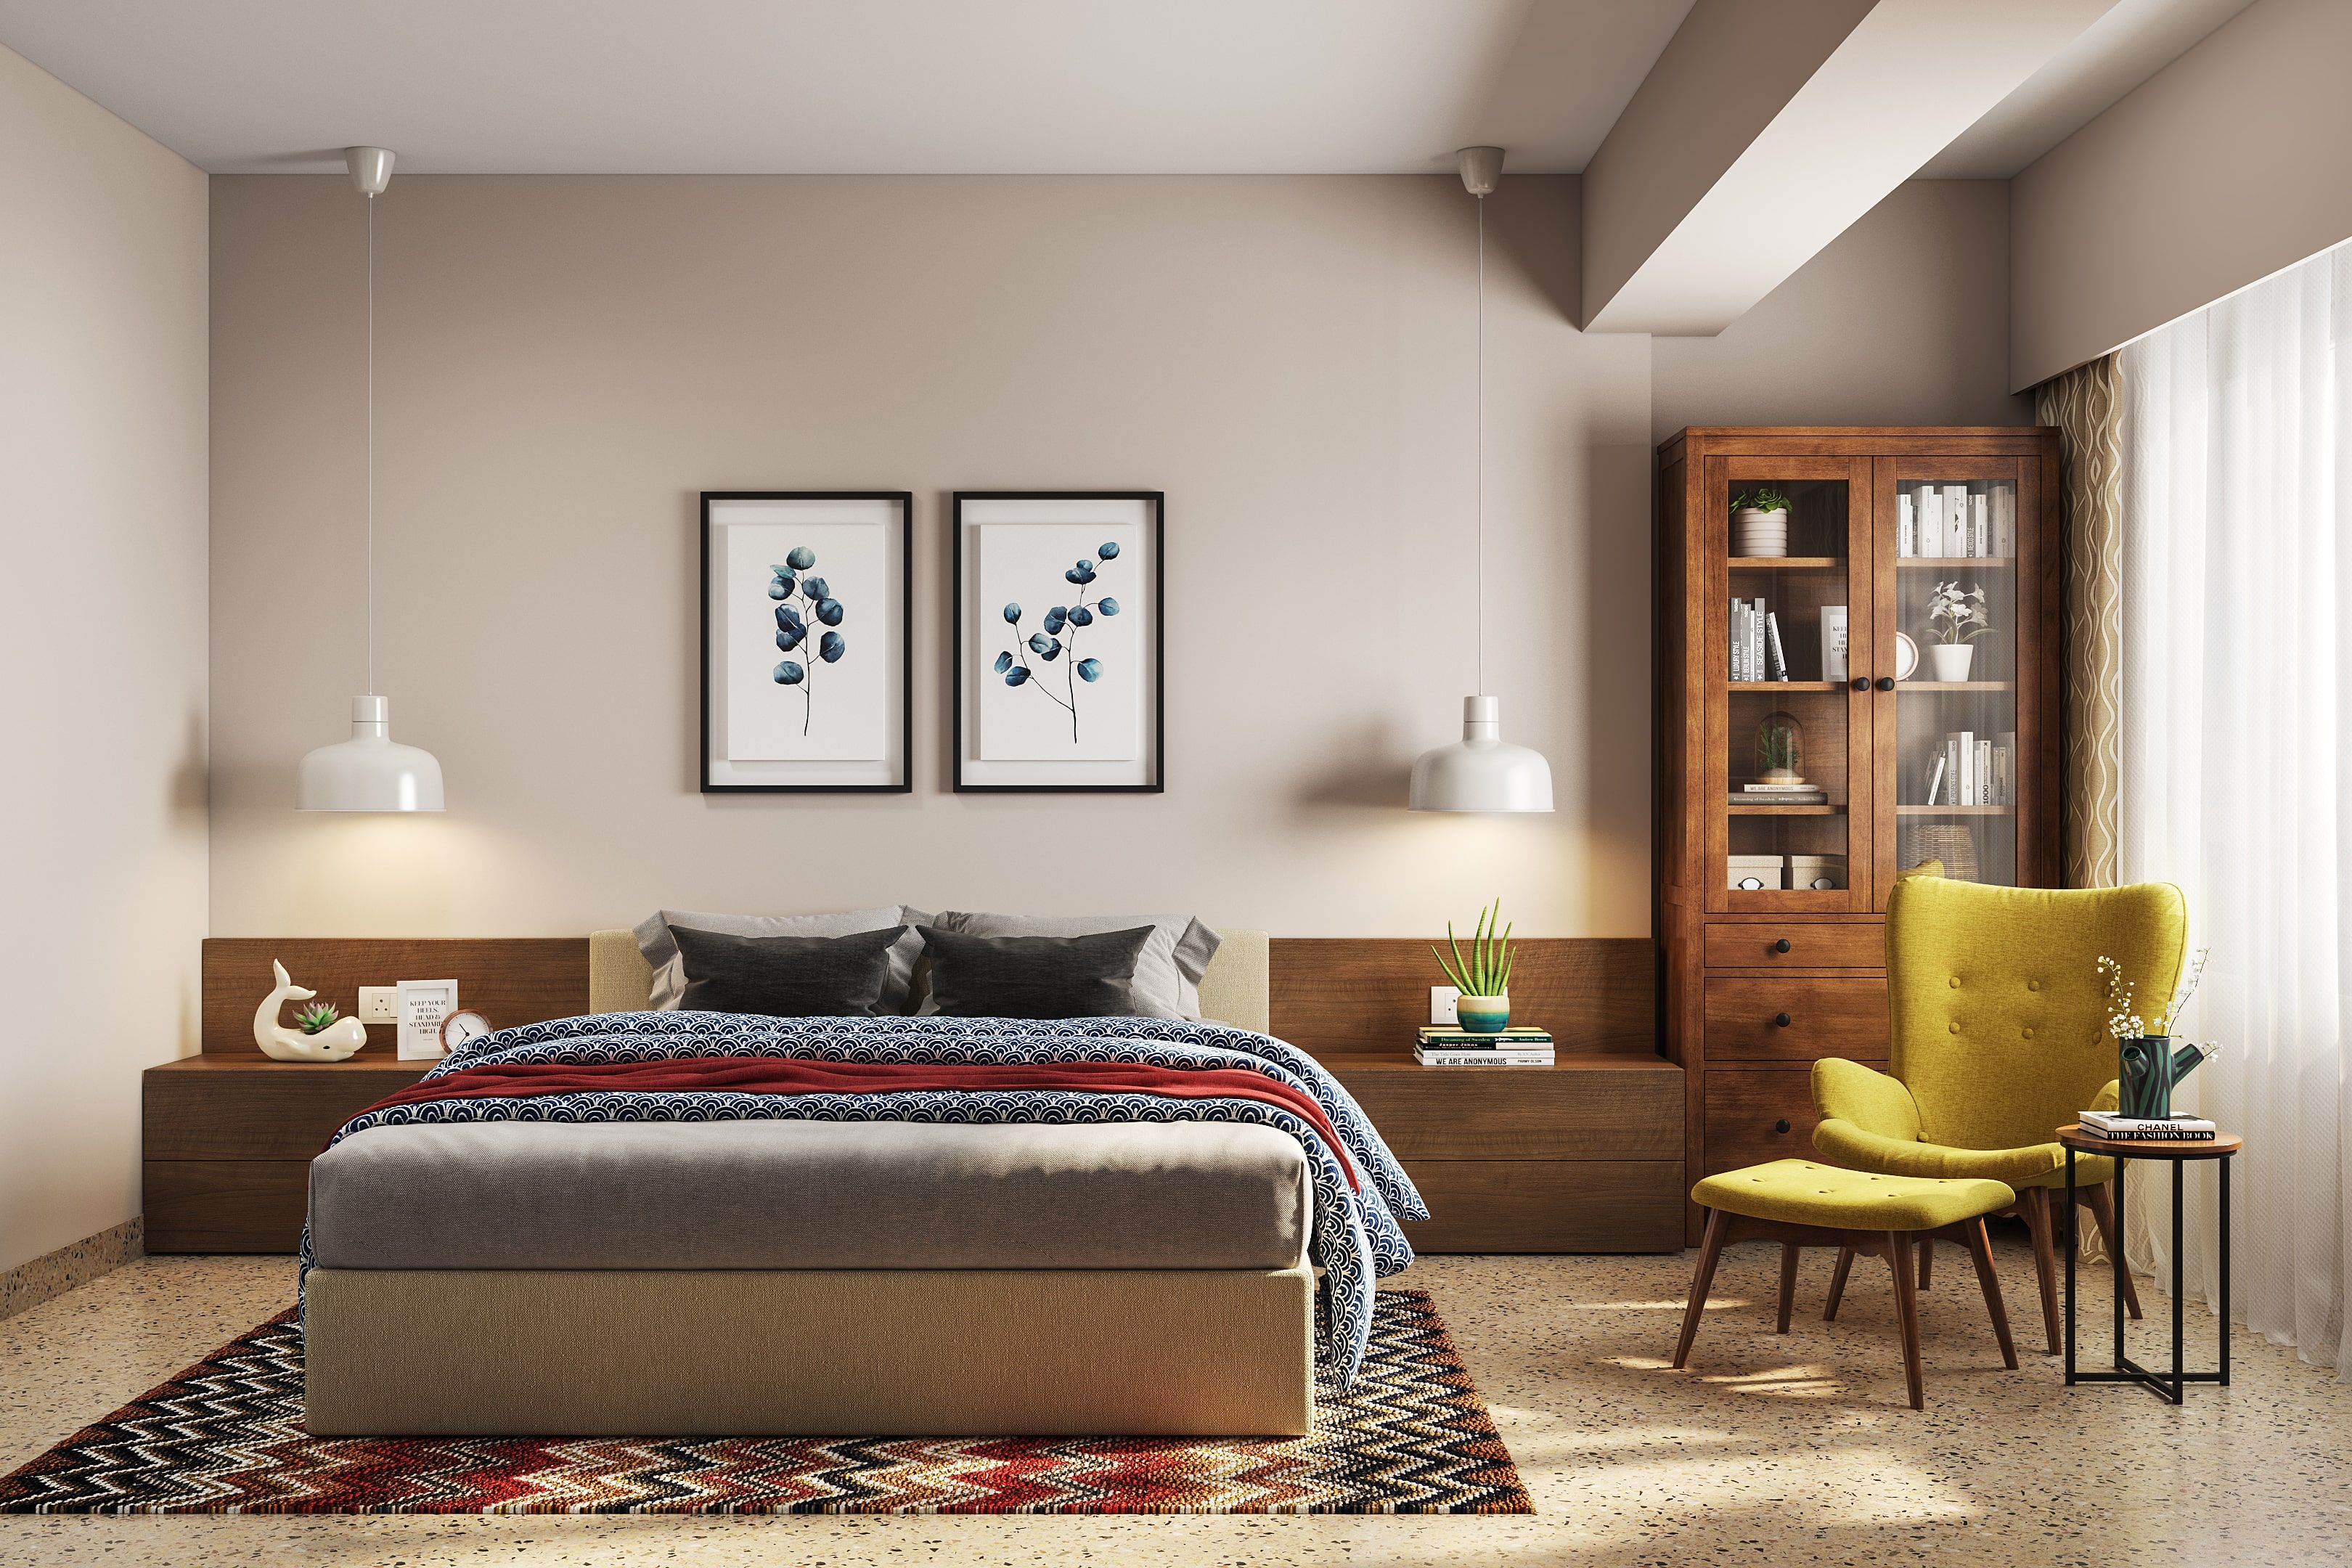 Transitional Master Bedroom Design With Pendant Lights